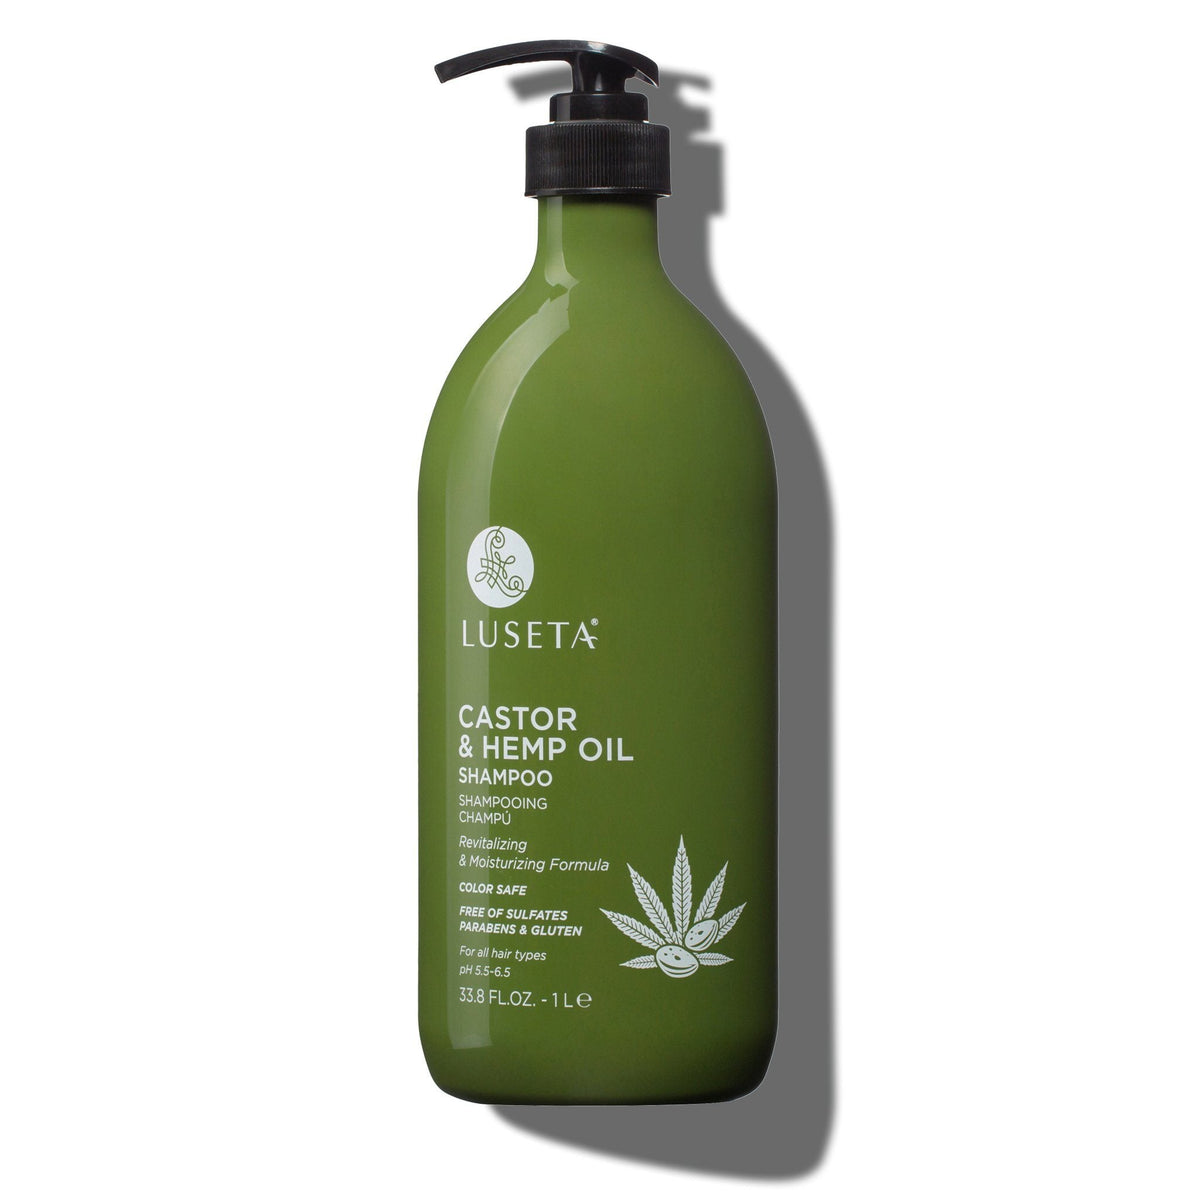 Castor & Hemp Oil Shampoo - 33.8oz - by Luseta Beauty |ProCare Outlet|